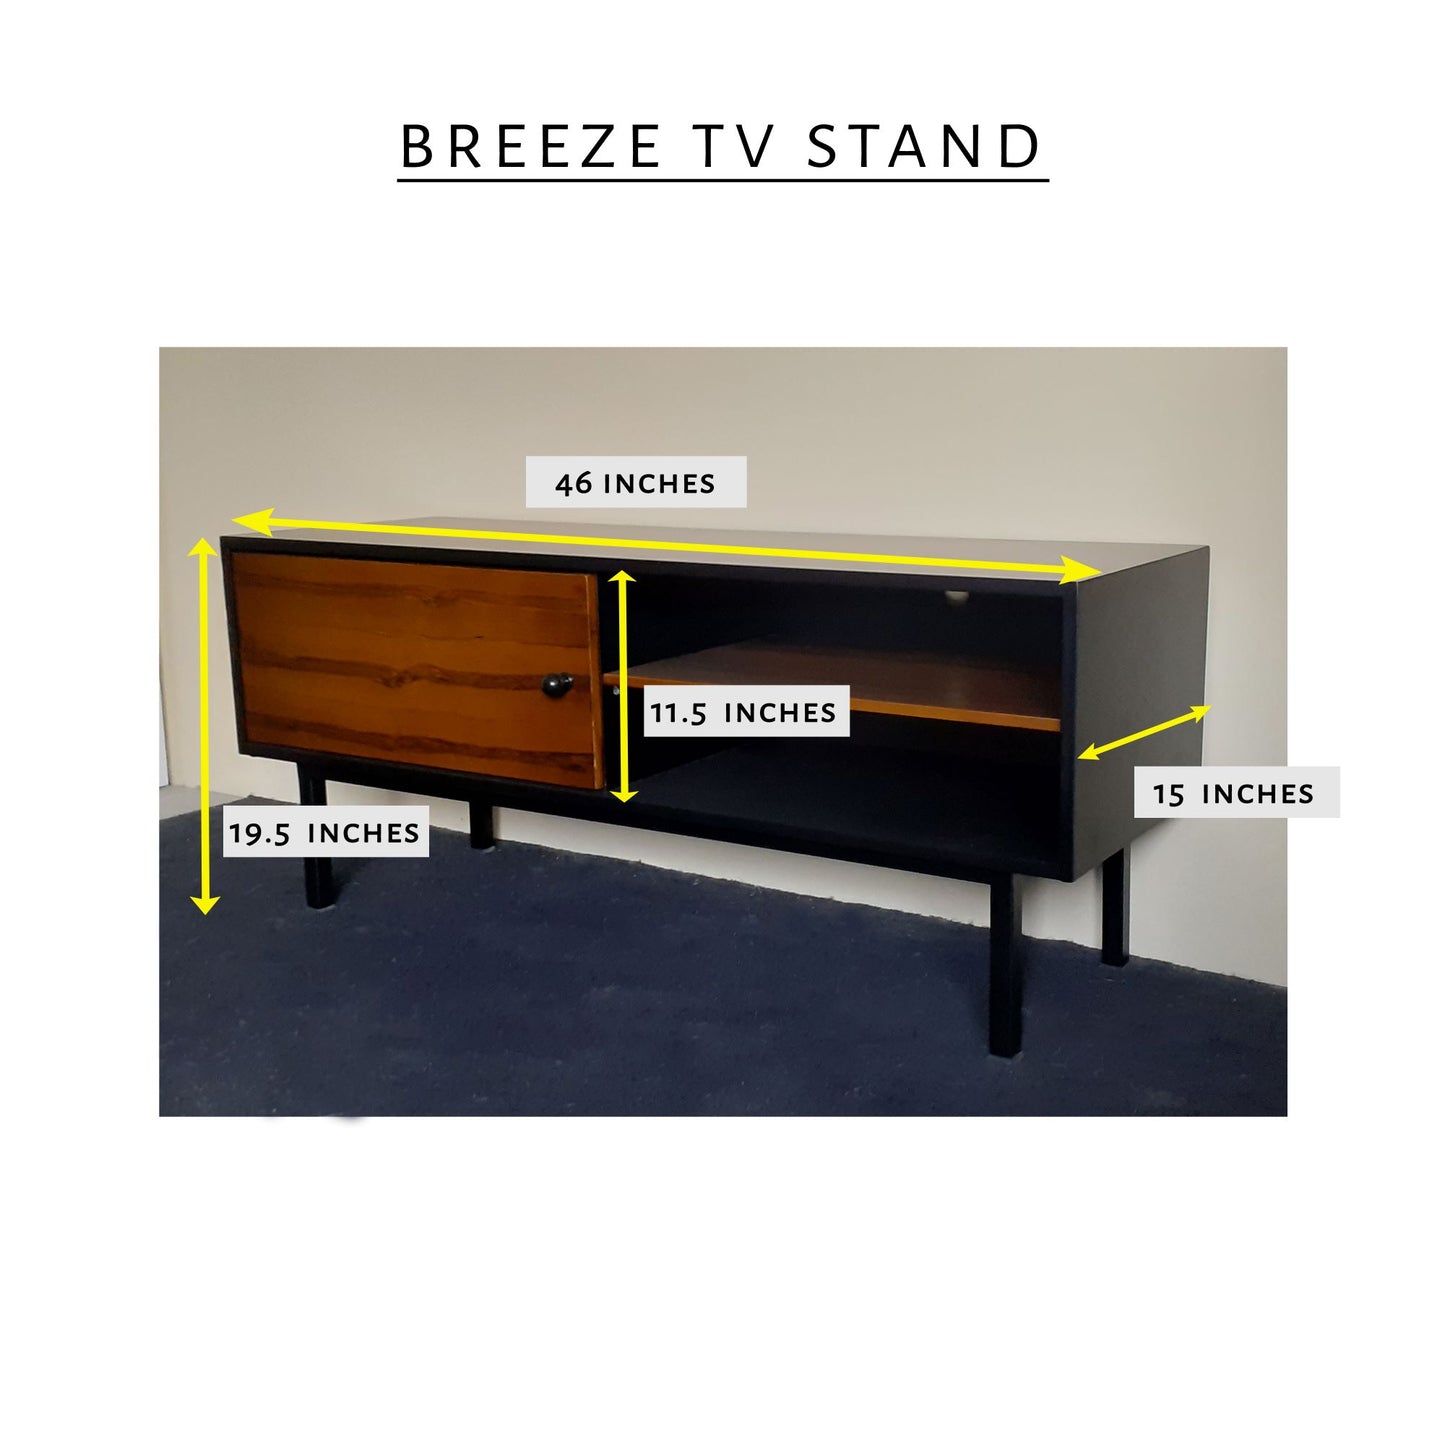 Breeze TV Stand